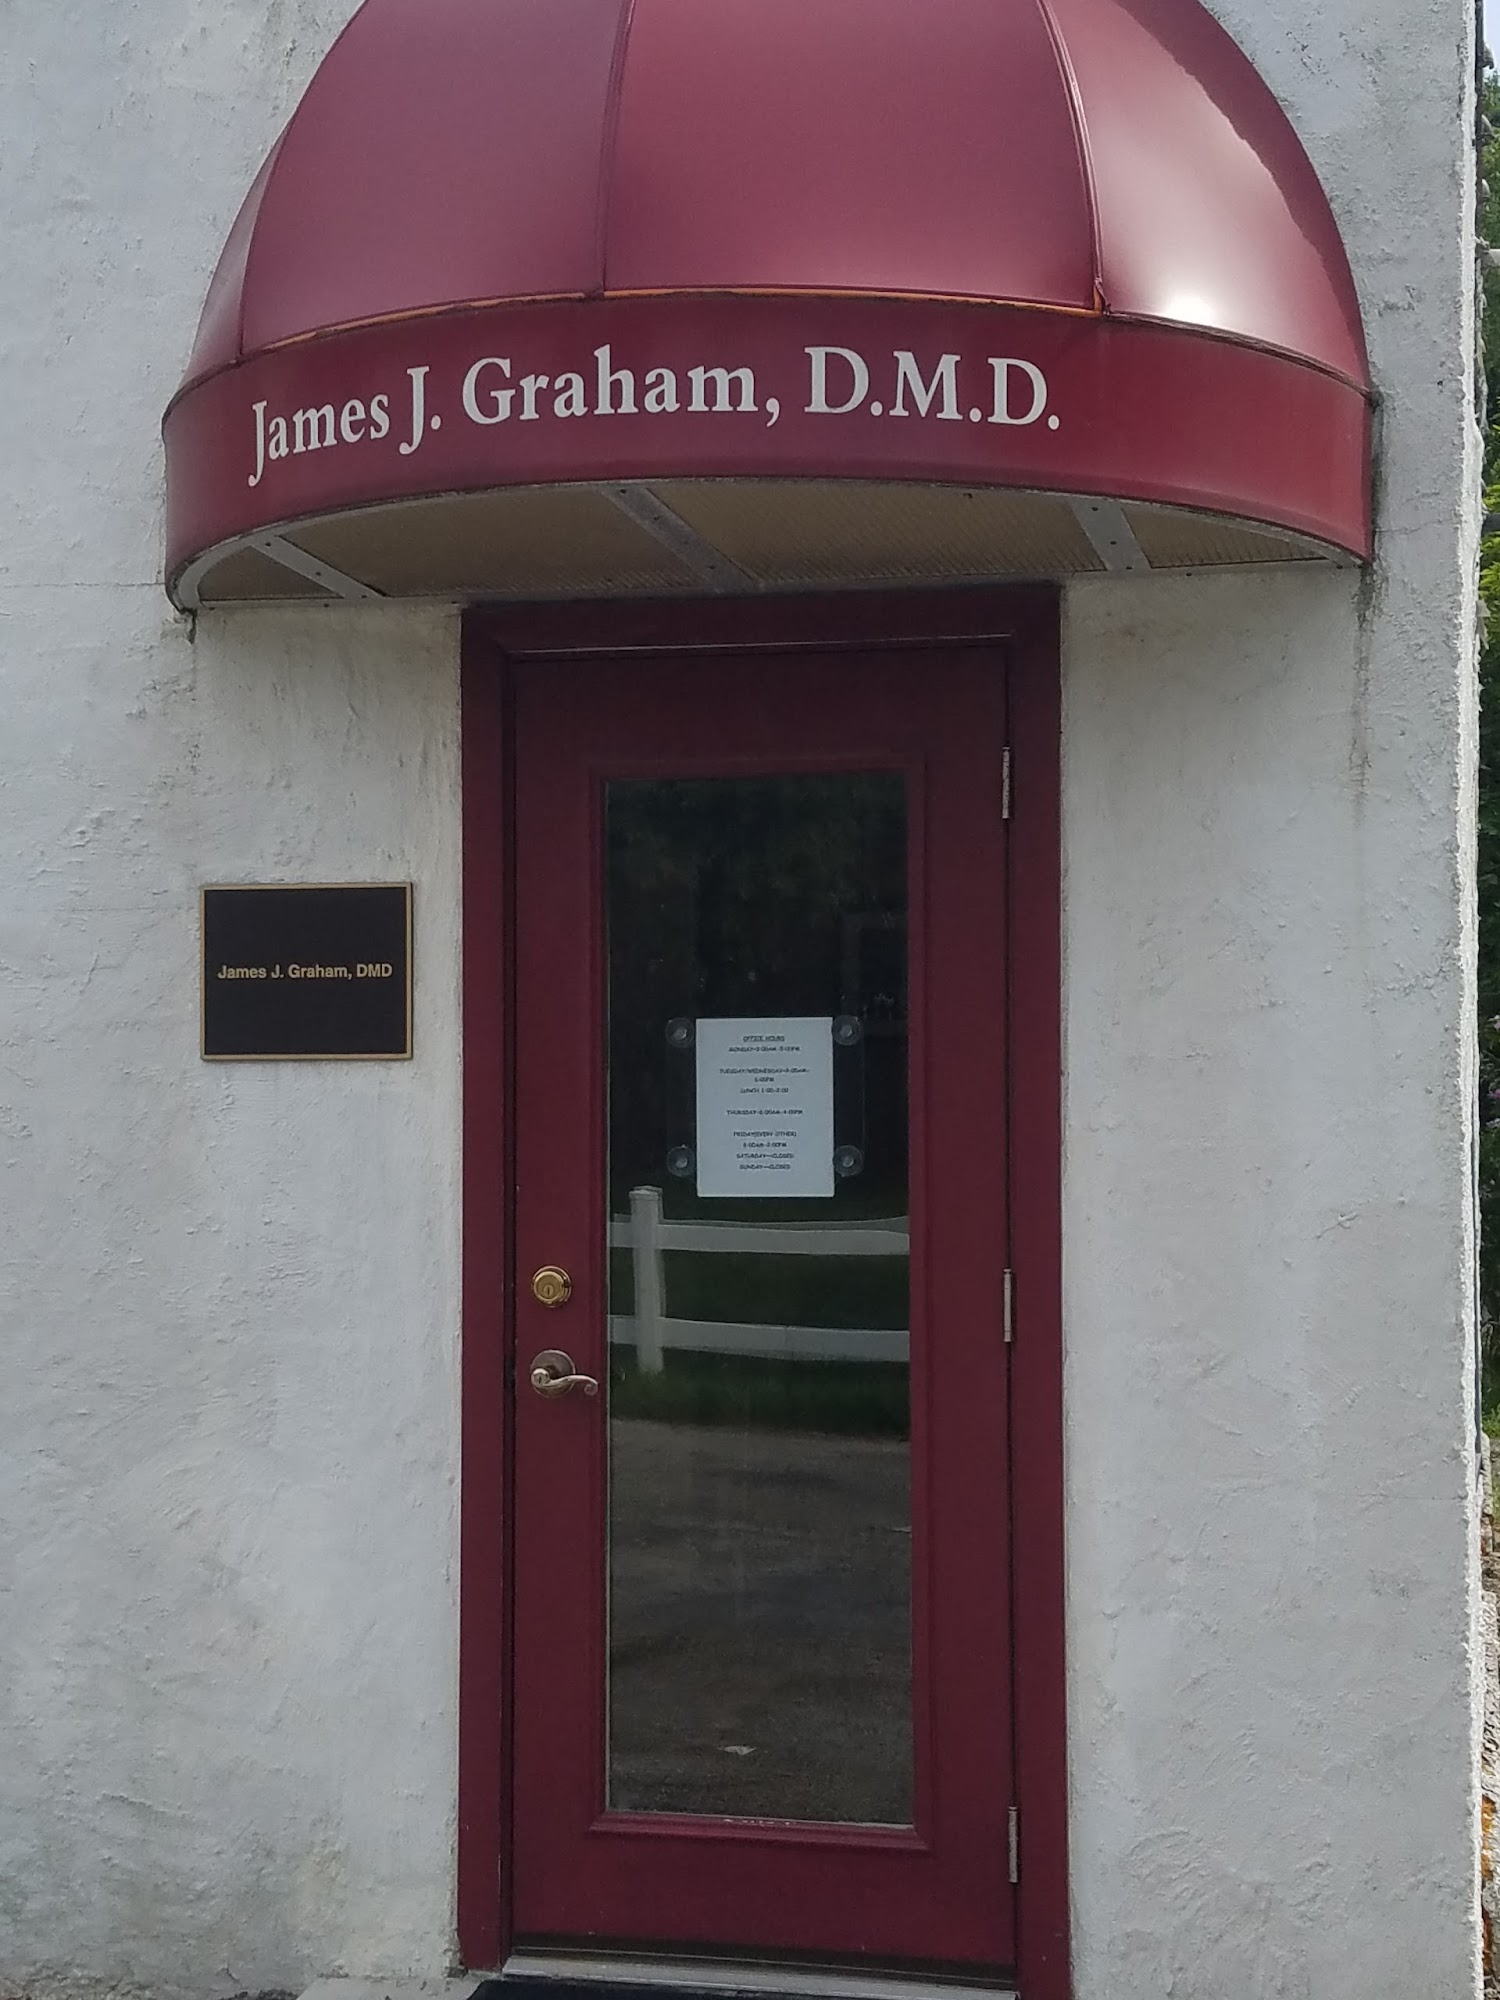 Graham James J DMD